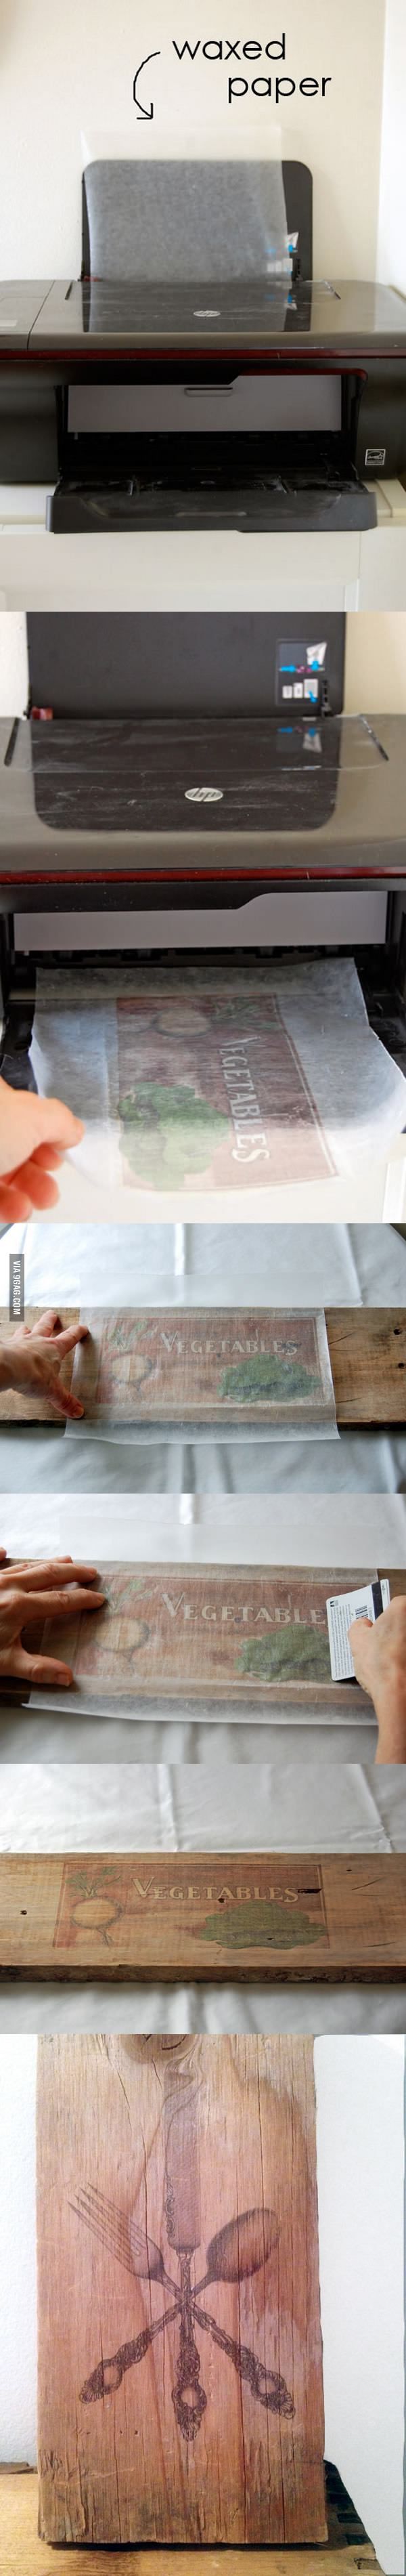 Printing on wood